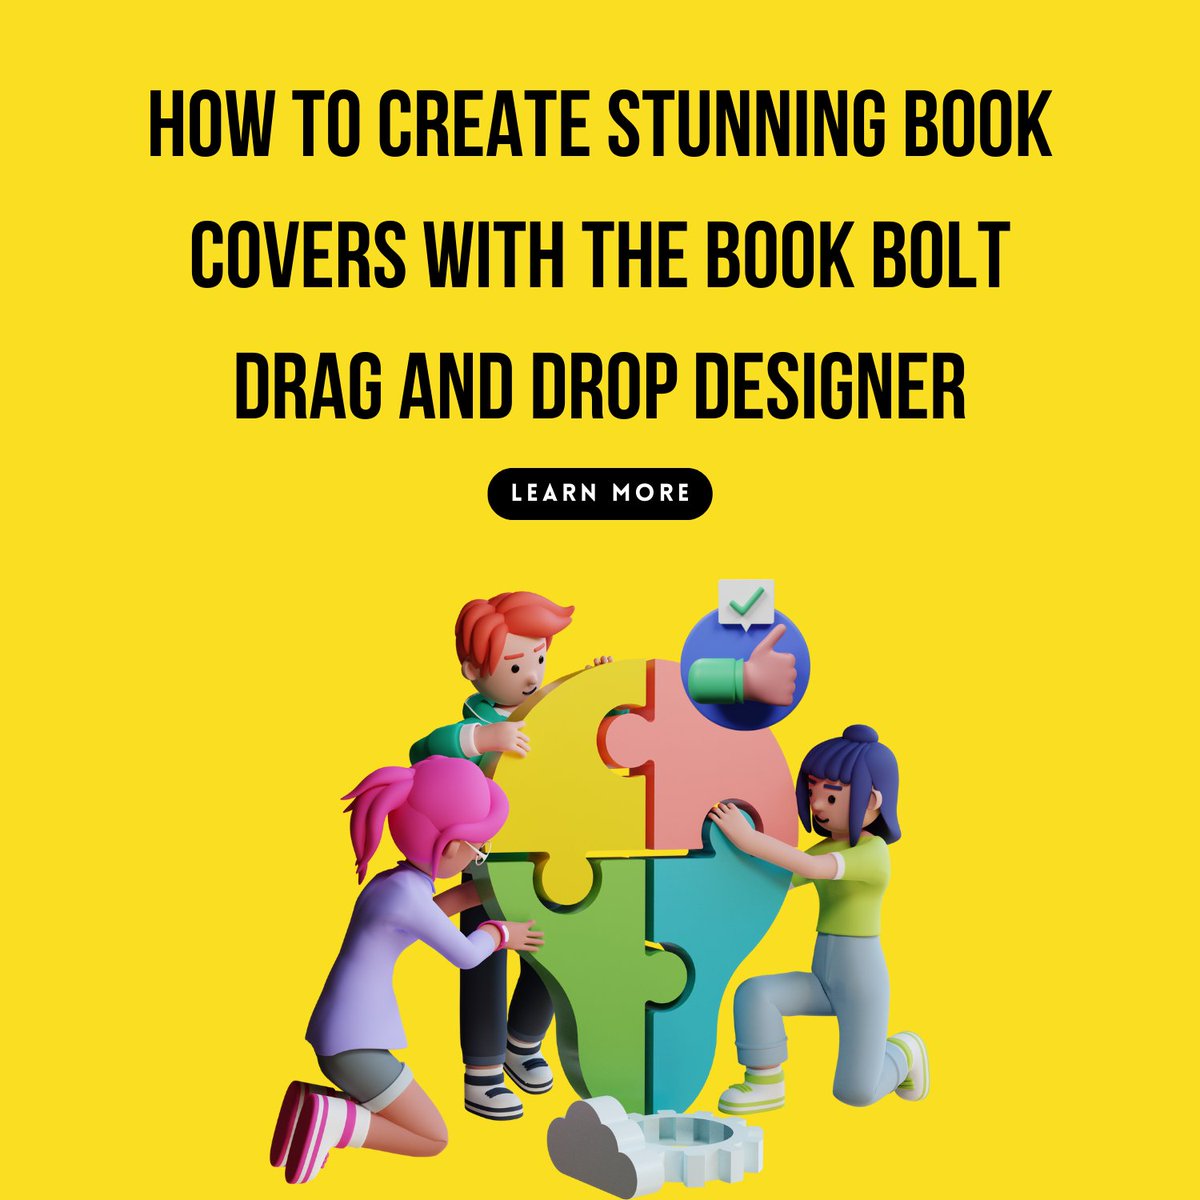 bookbolt.io/1596.html Create Book Covers With The Book Bolt Drag And Drop Designer! #book #bookinteriors #covers #design #kdp #kdpbook #bookbold #bookcovers #lowcontentbooks #lowcontentniches #listkdpbooks #amazonsearchvolume #kdpkeywords #designer #uiux #designthinking